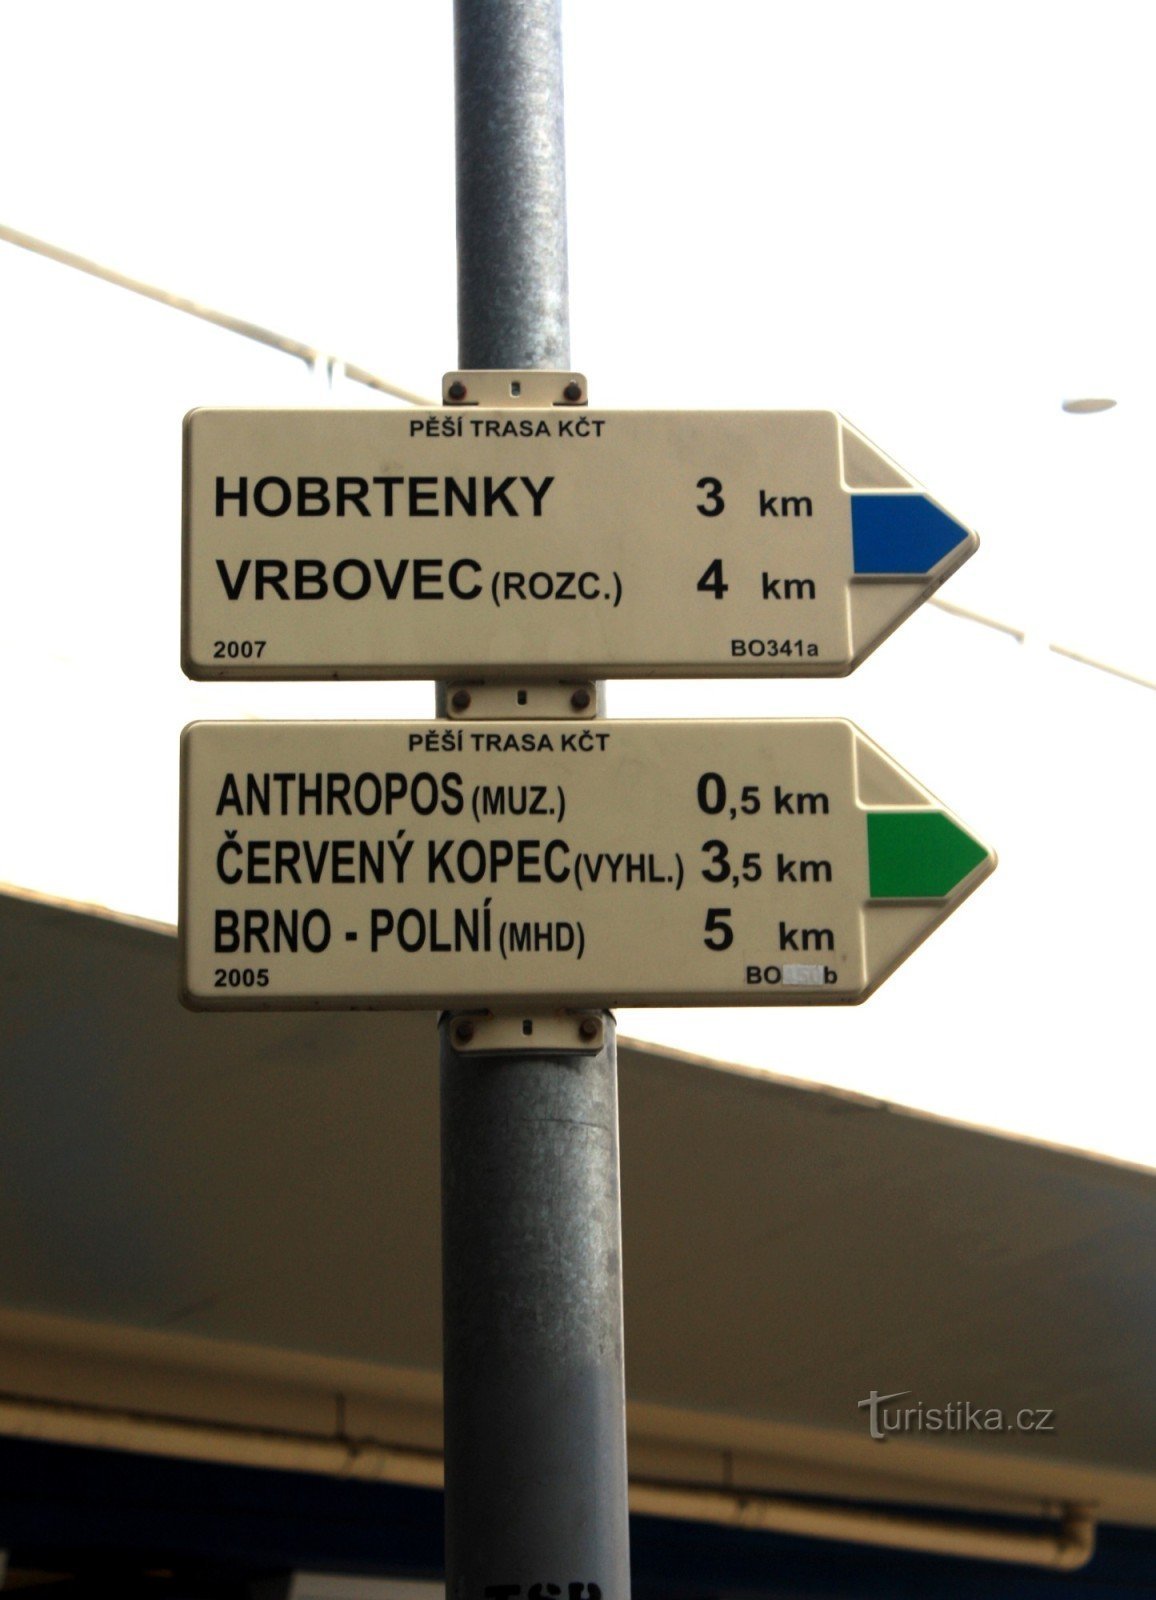 Cruzamento turístico Brno-Pisárky